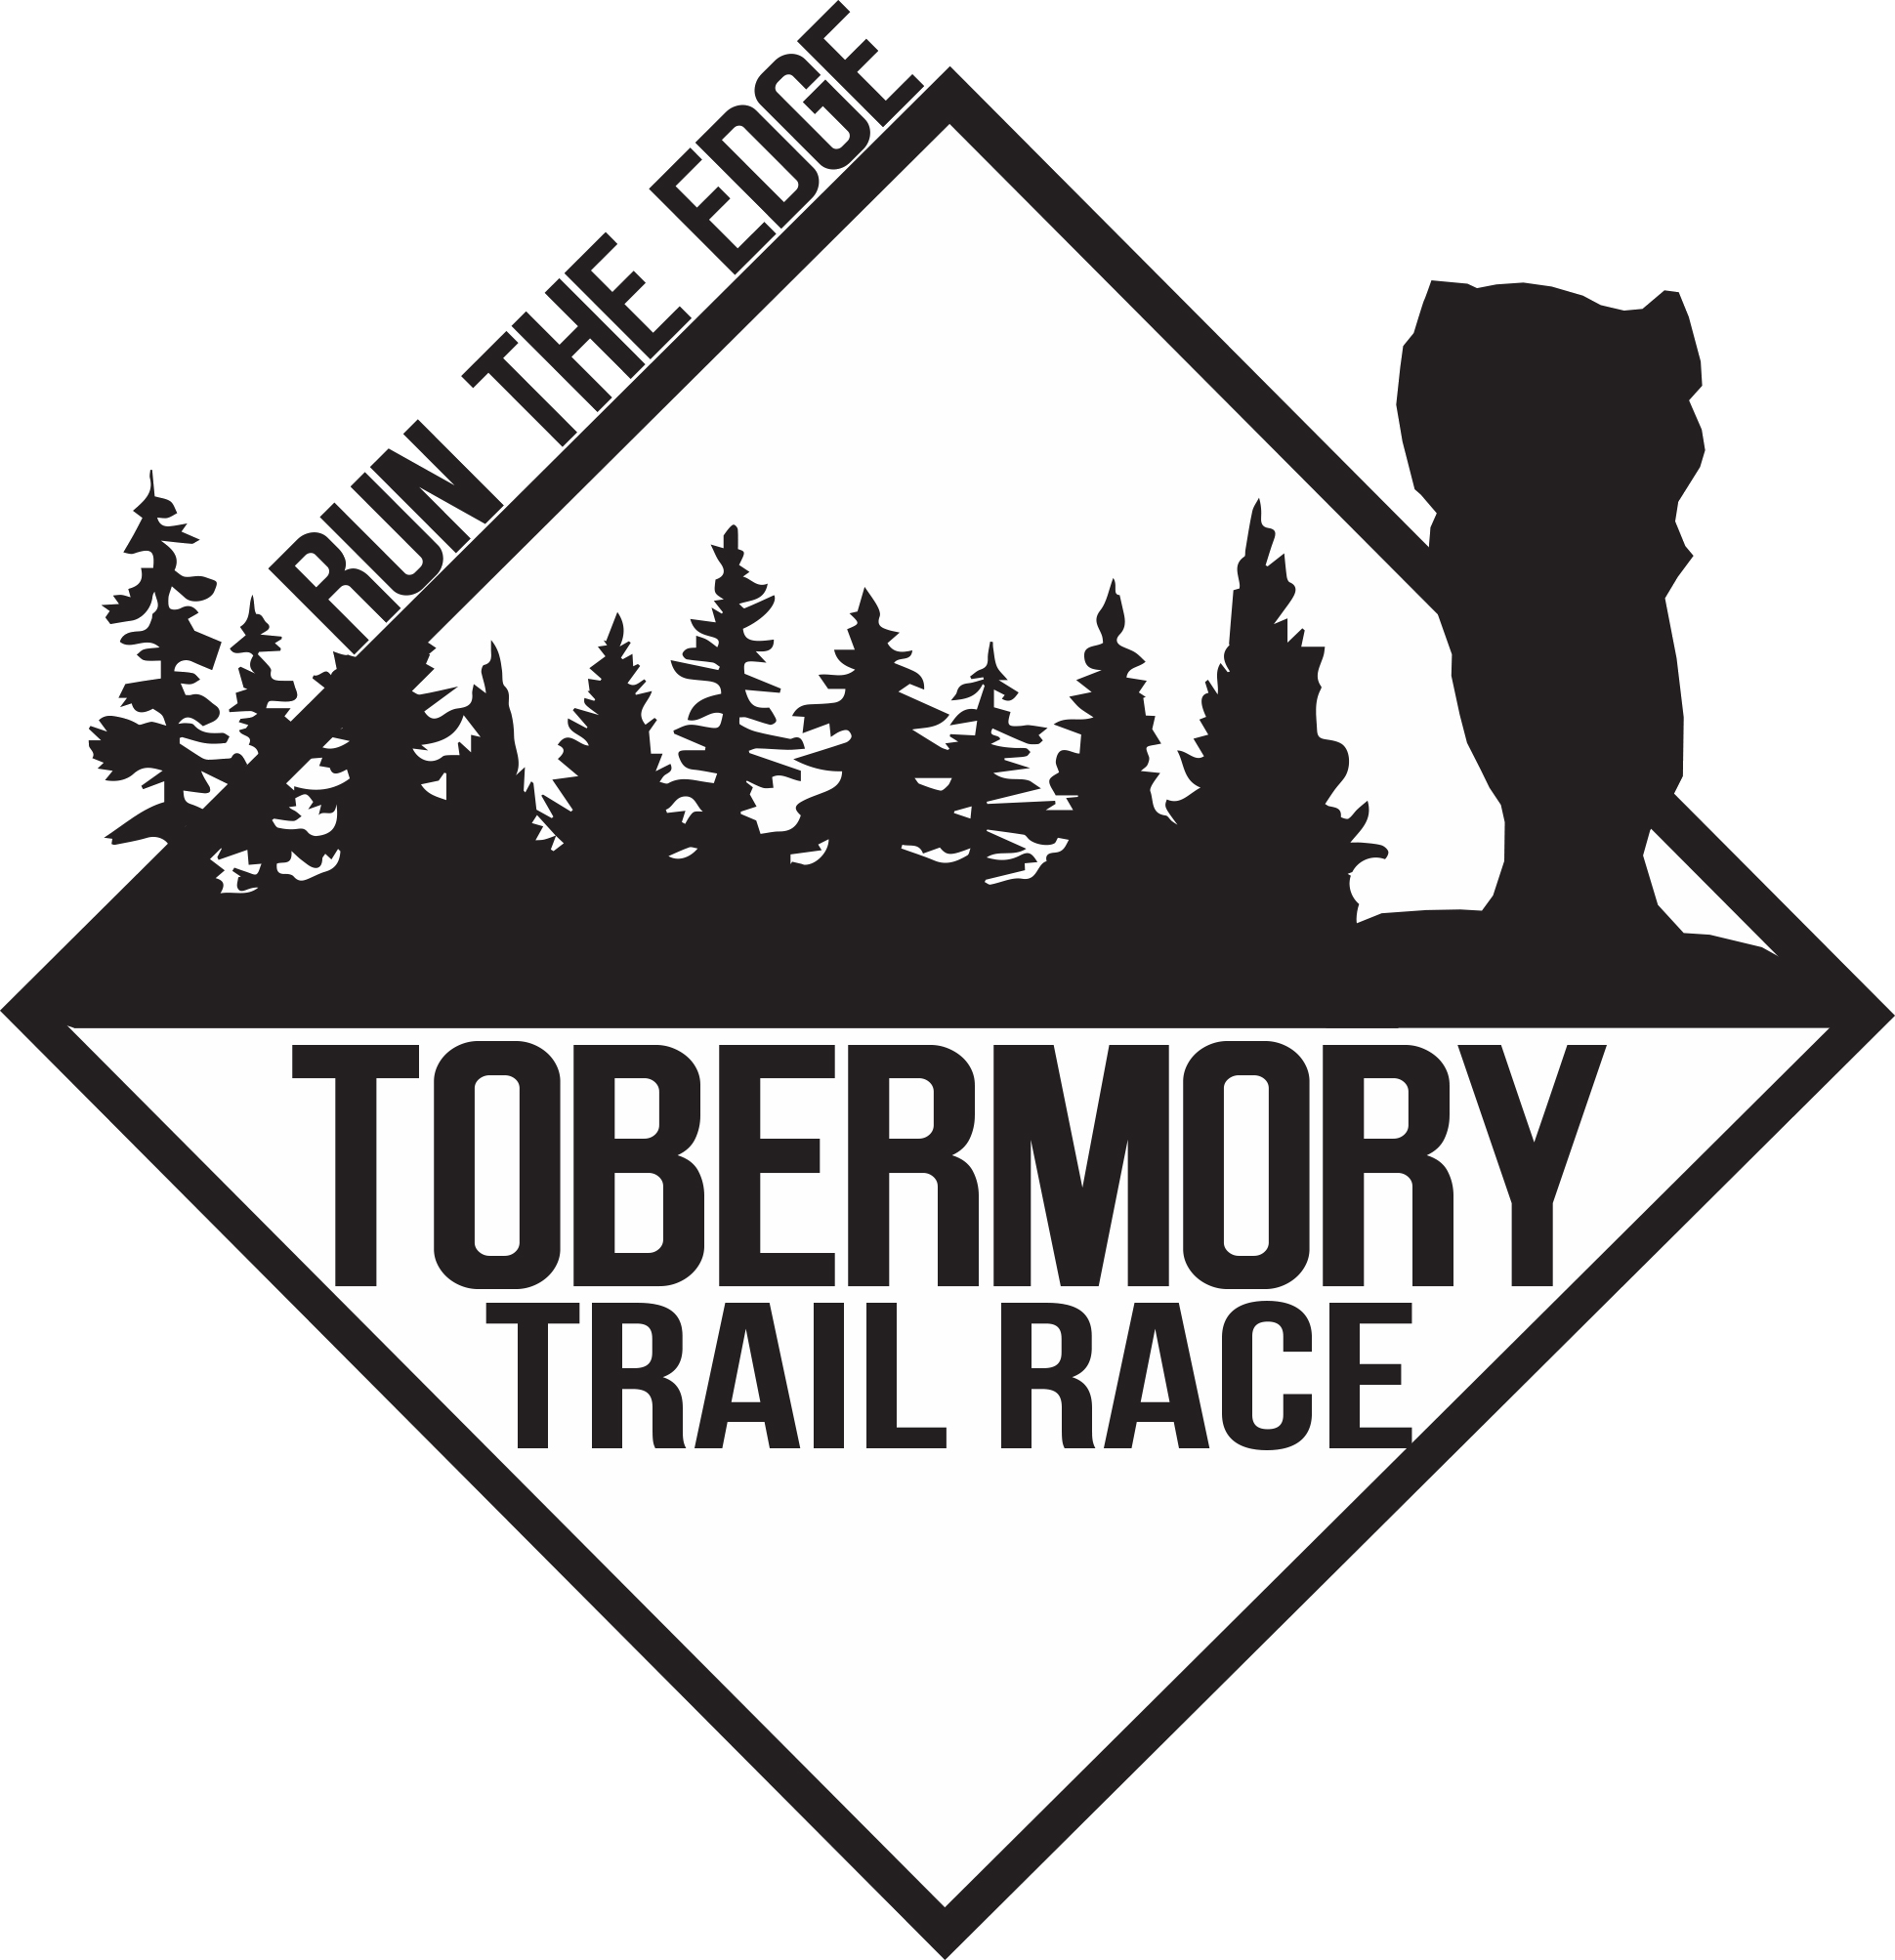 Tobermory trail race